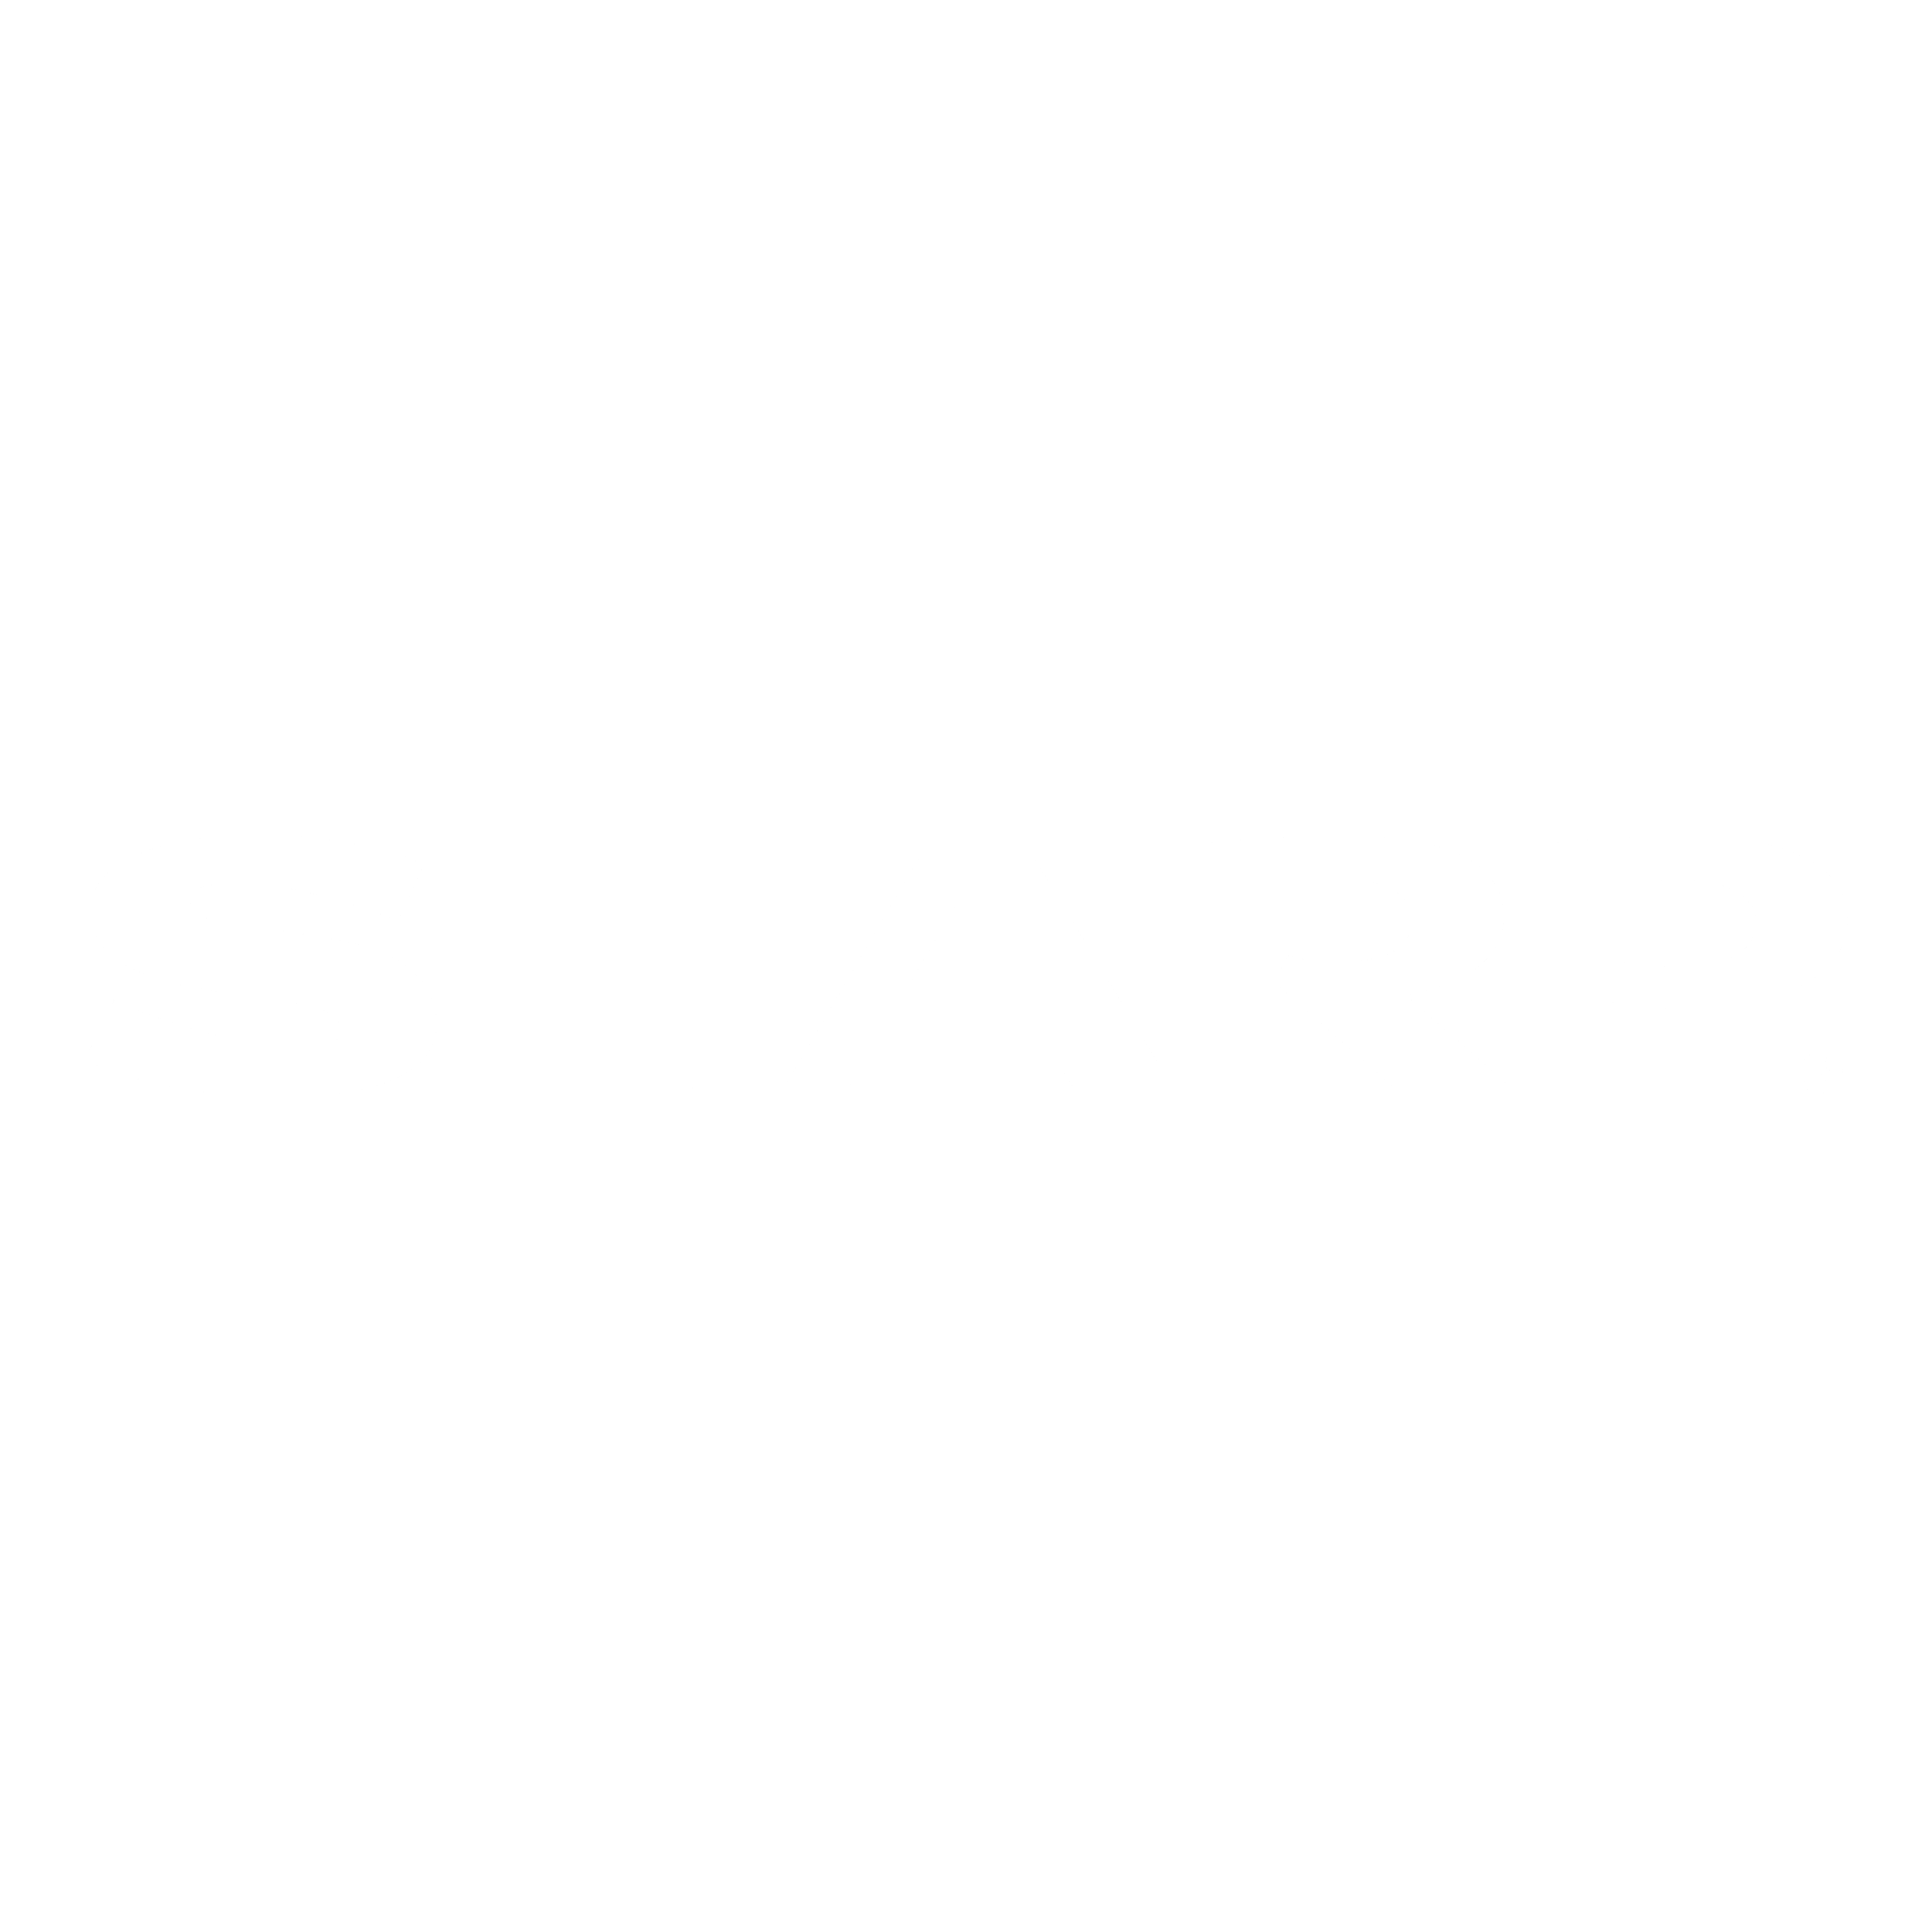 Sharp Logo - Sharp Logo PNG Transparent & SVG Vector - Freebie Supply